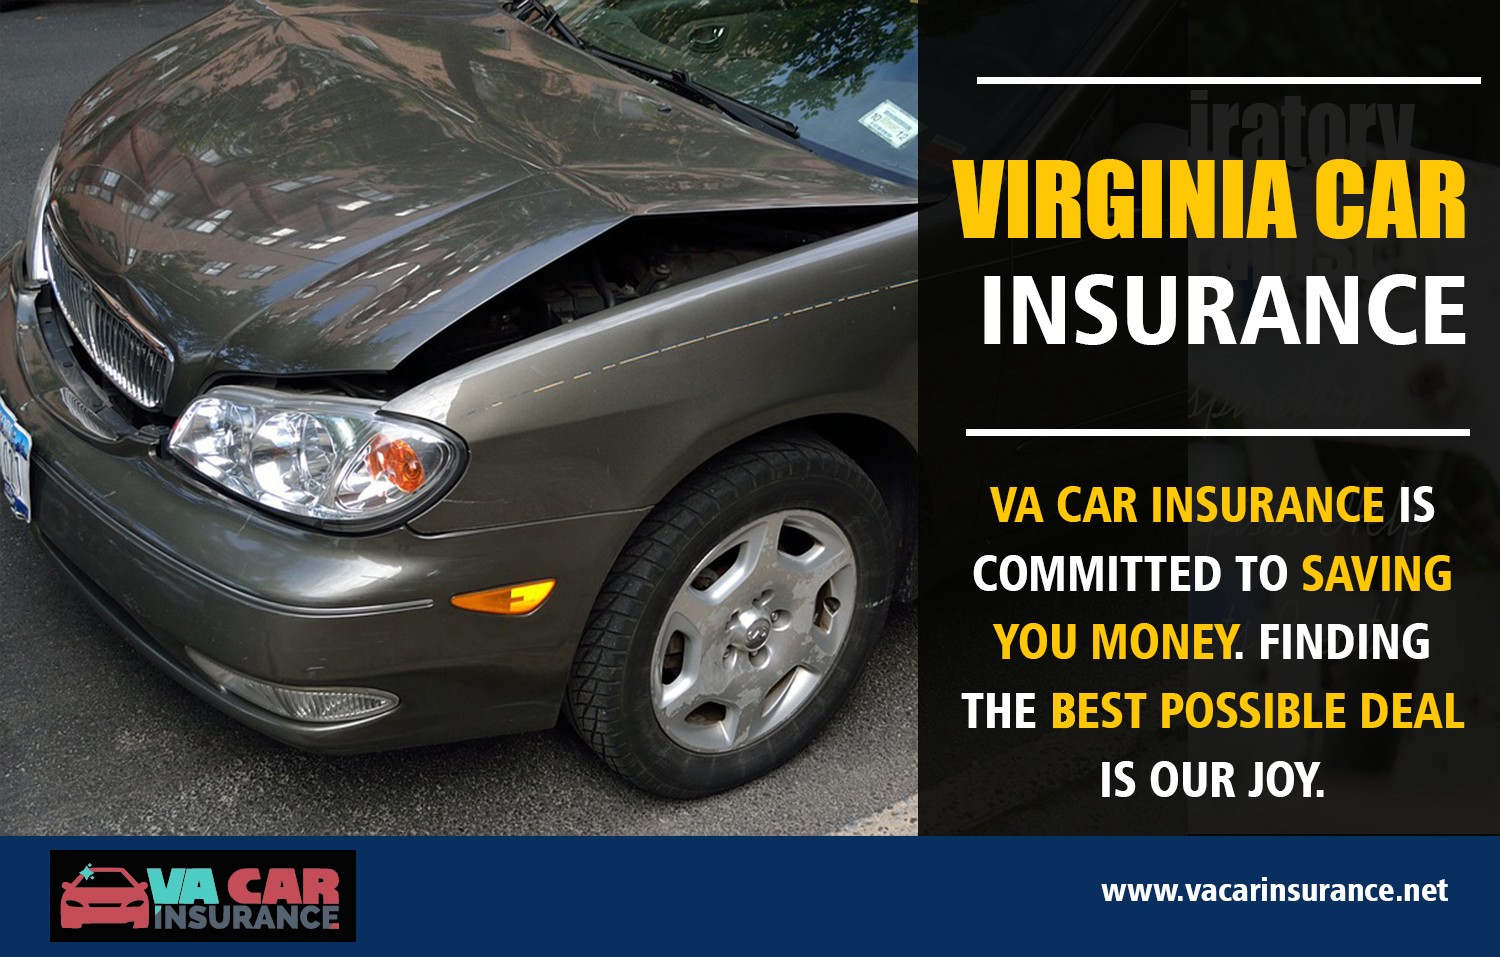 Virginia Car Insurance Va Car Insurance Medium with regard to size 1500 X 957